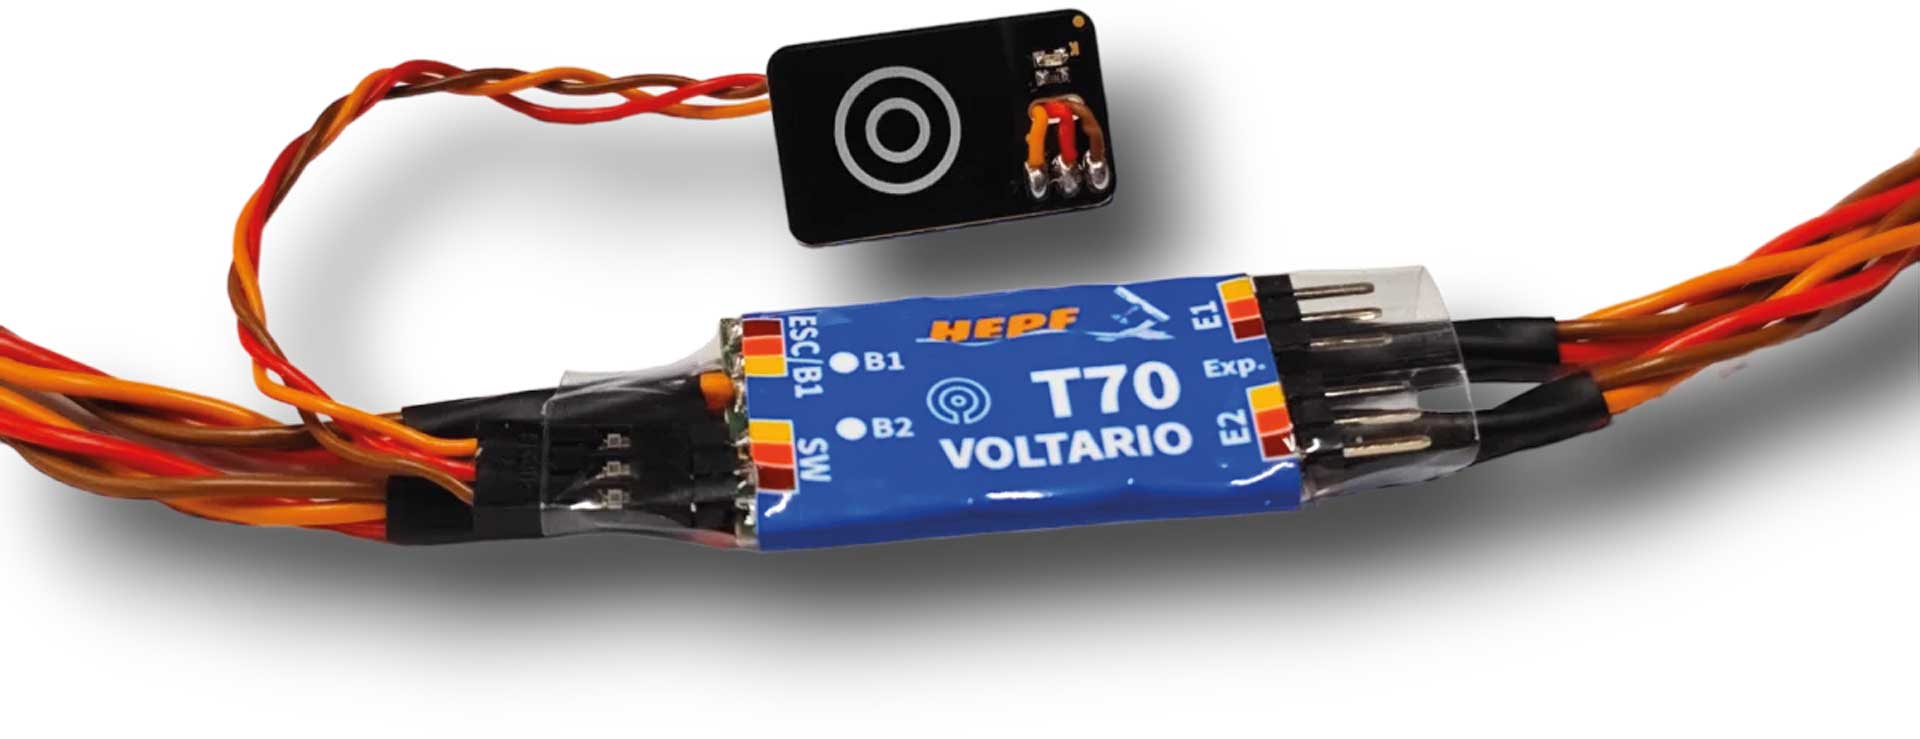 HEPF Voltario T70 with JR connector system